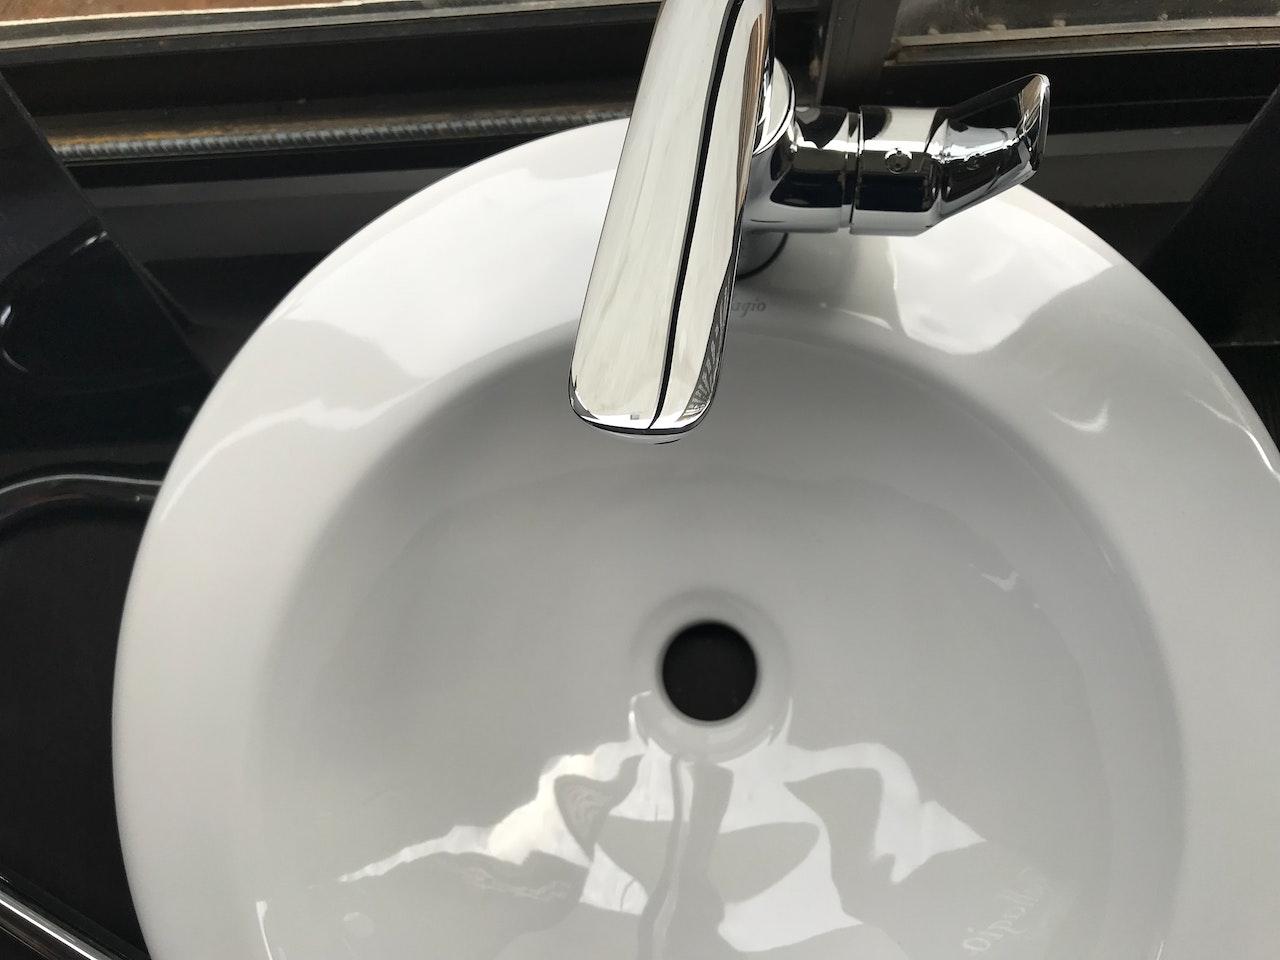 Sink Disposal Repair Installation